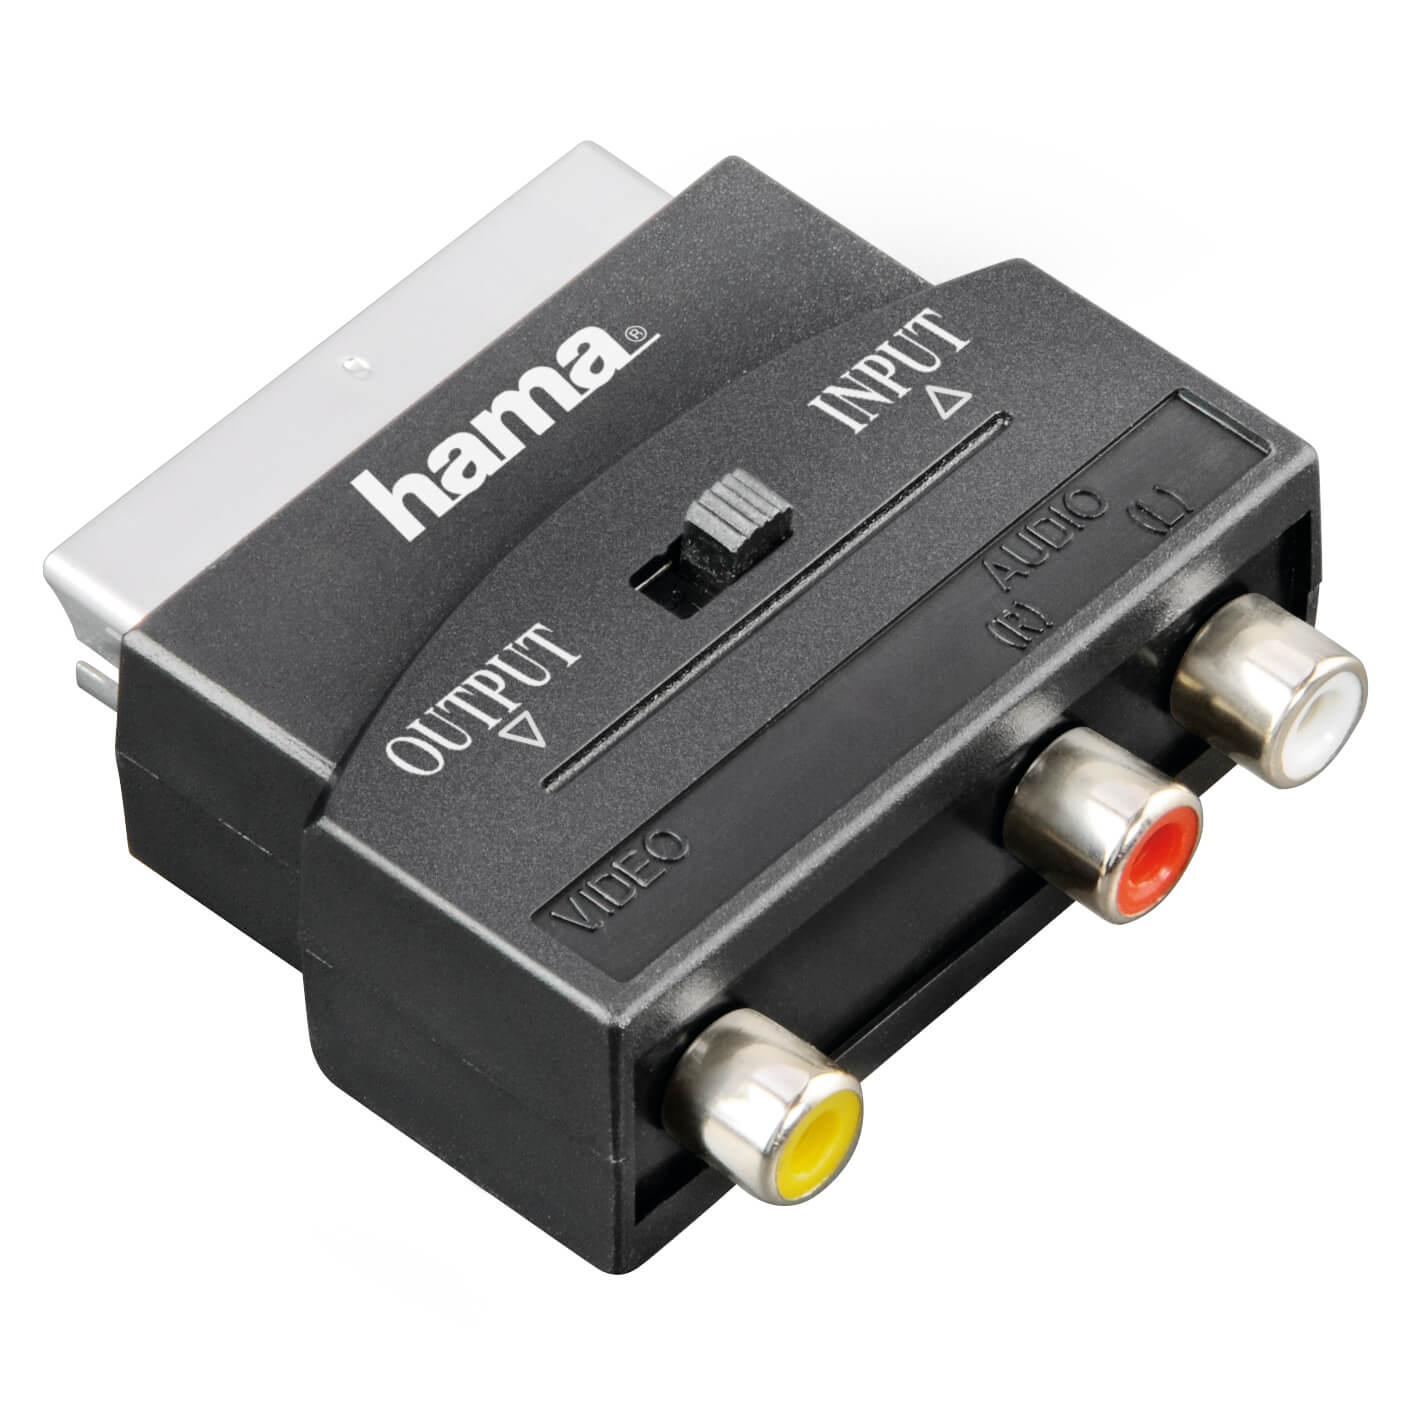 Video Adapter, 3 RCA sockets (1x video/audio L a. R) - Scar